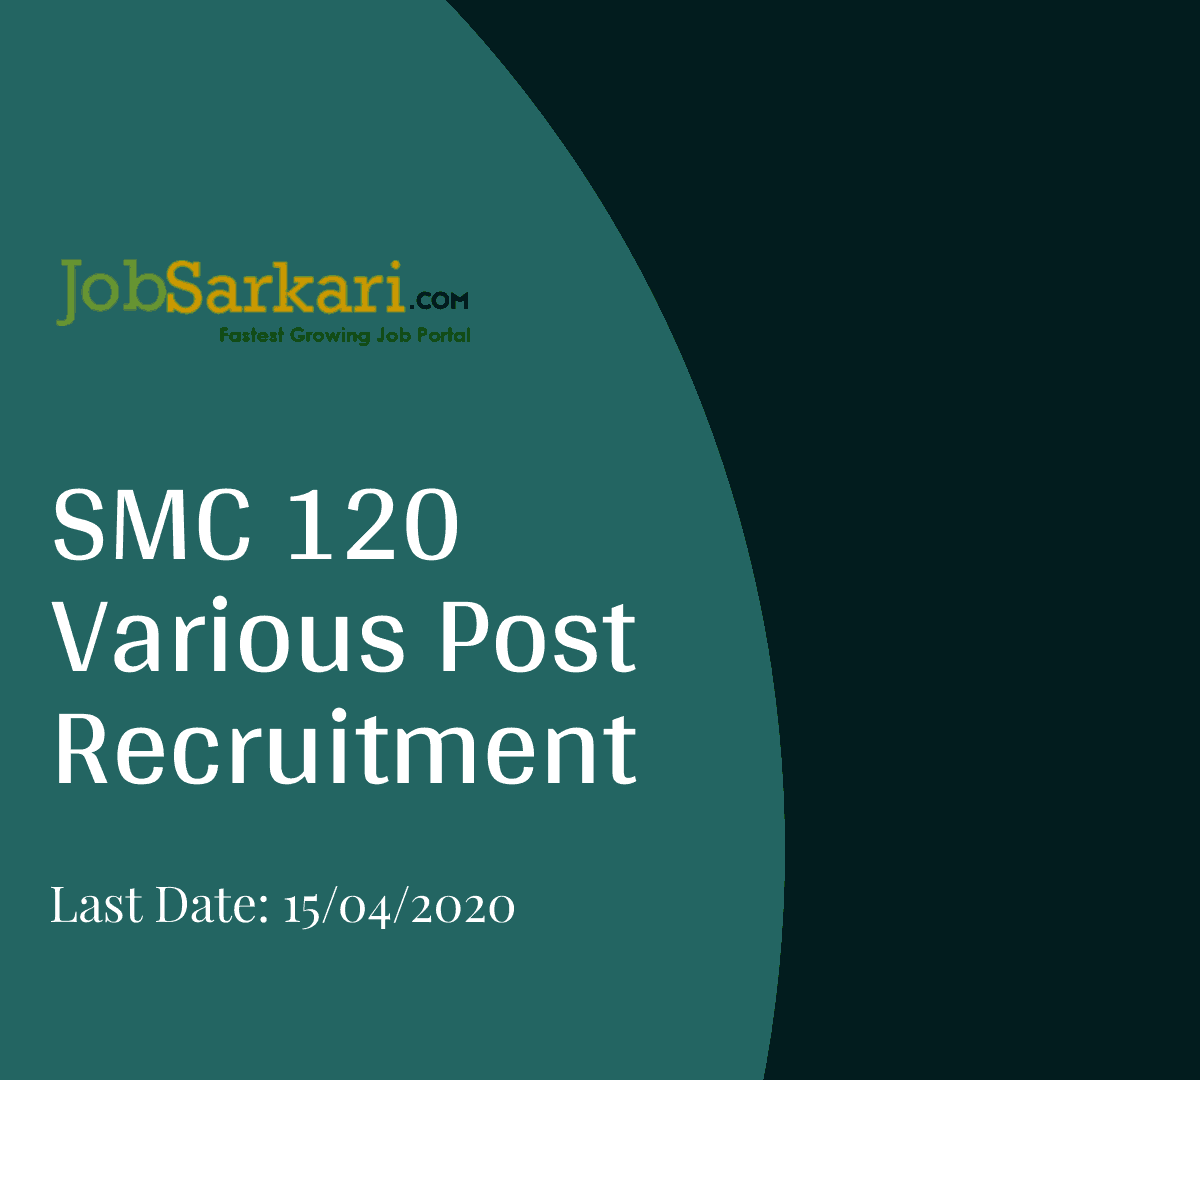 SMC Recruitment 2020 For Various Post